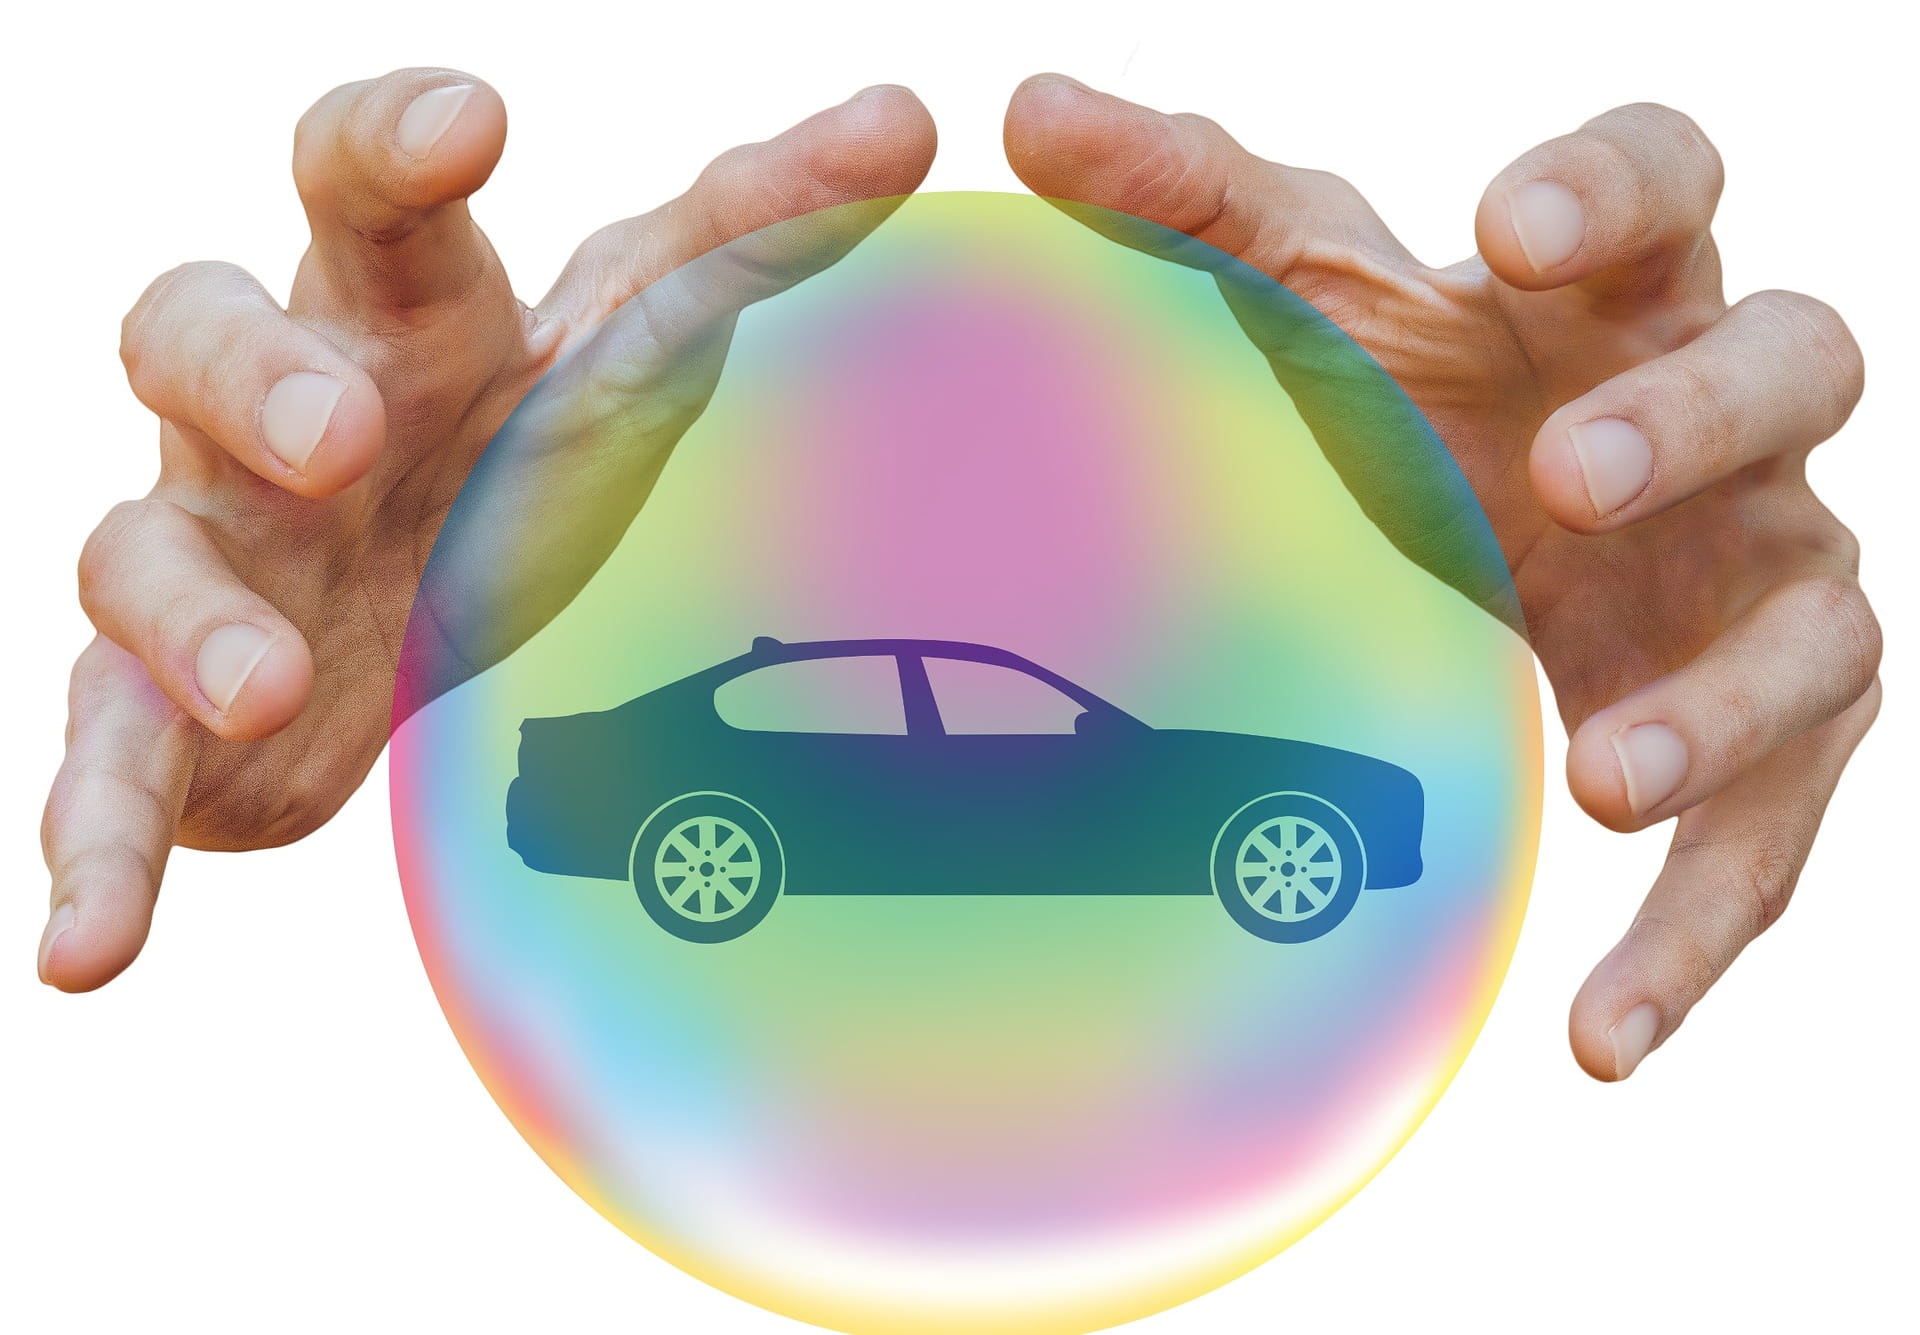 Car inside a bubble